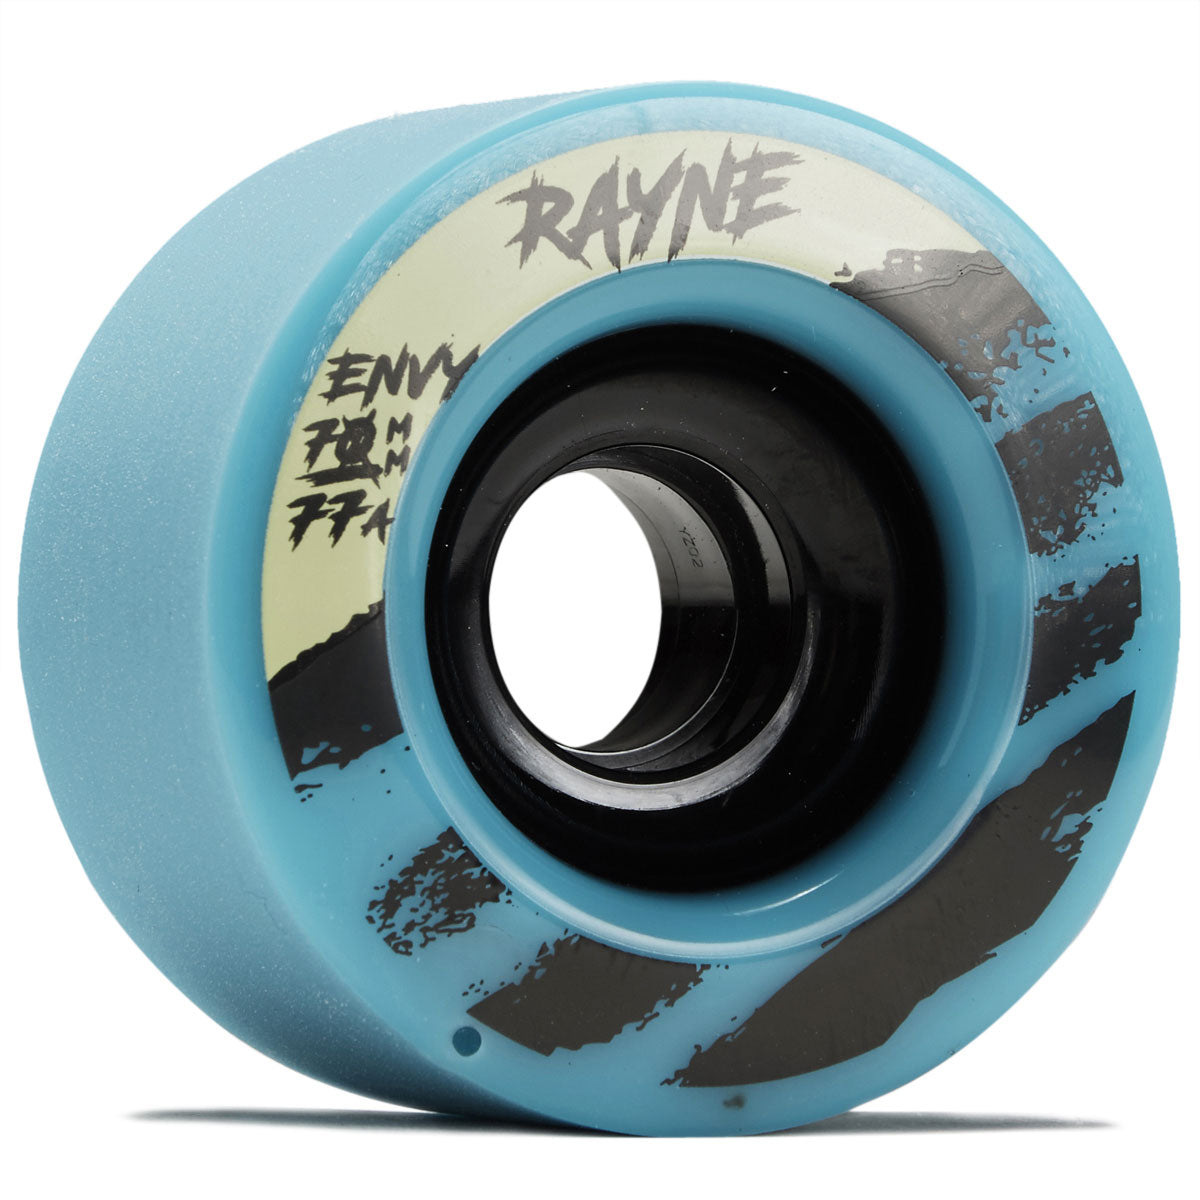 Rayne Envy V2 77a Longboard Wheels - Teal Jelly - 70mm image 1